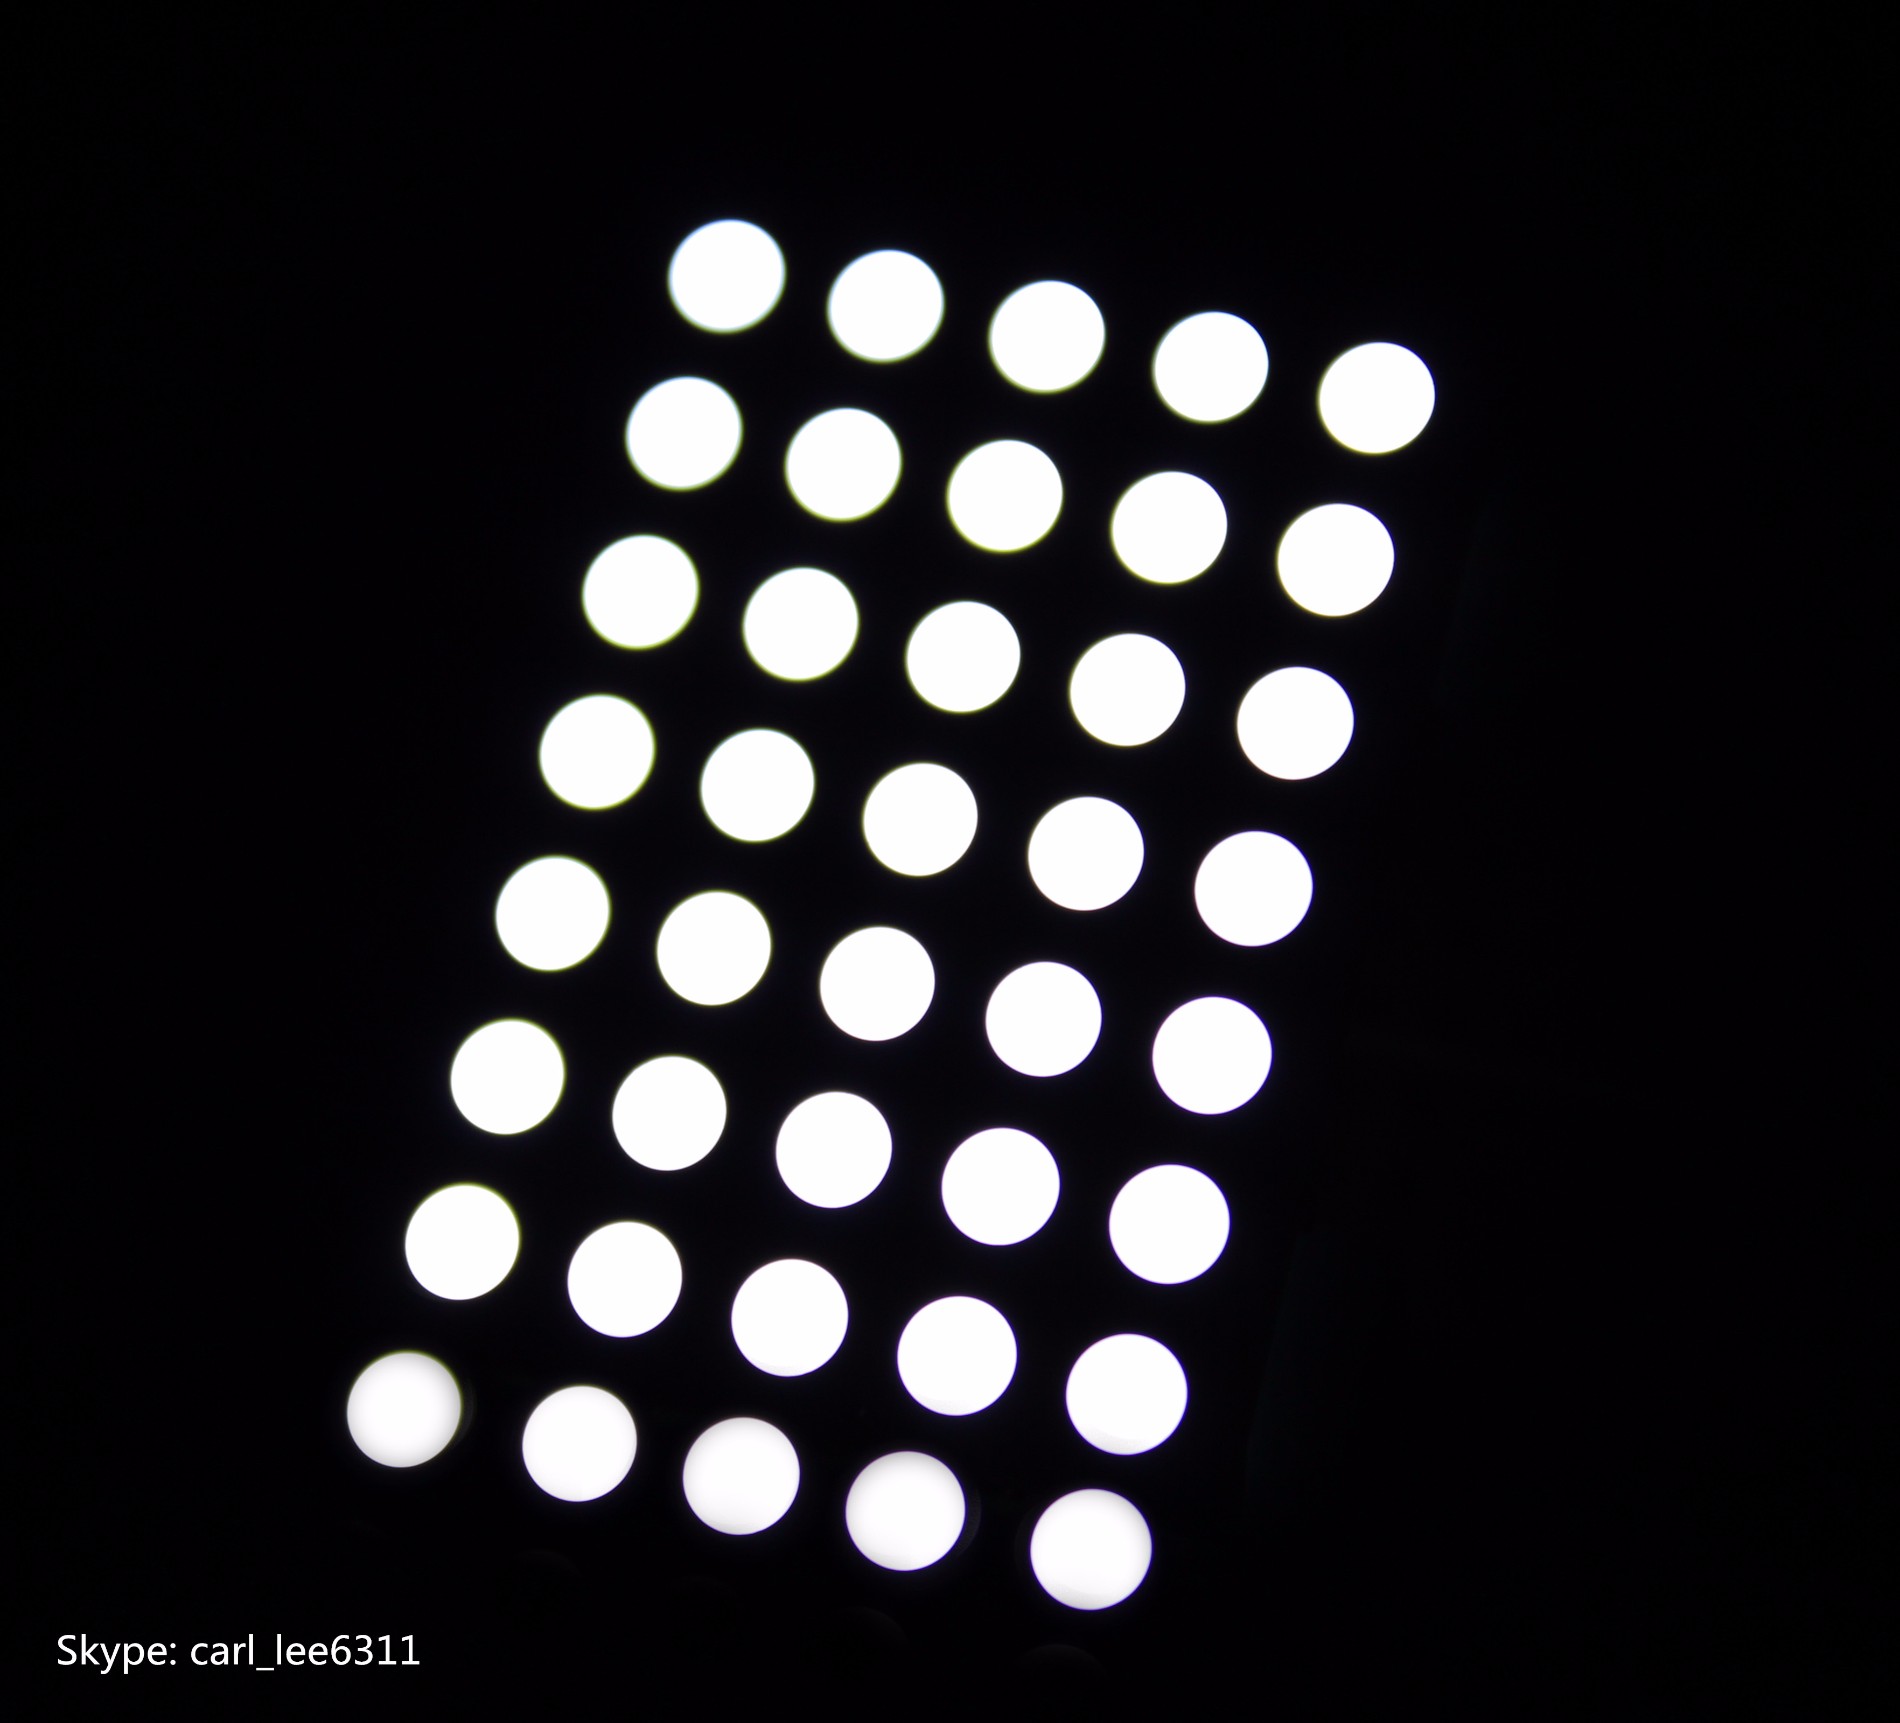 5x8 Dot Matrix Led Display Factory